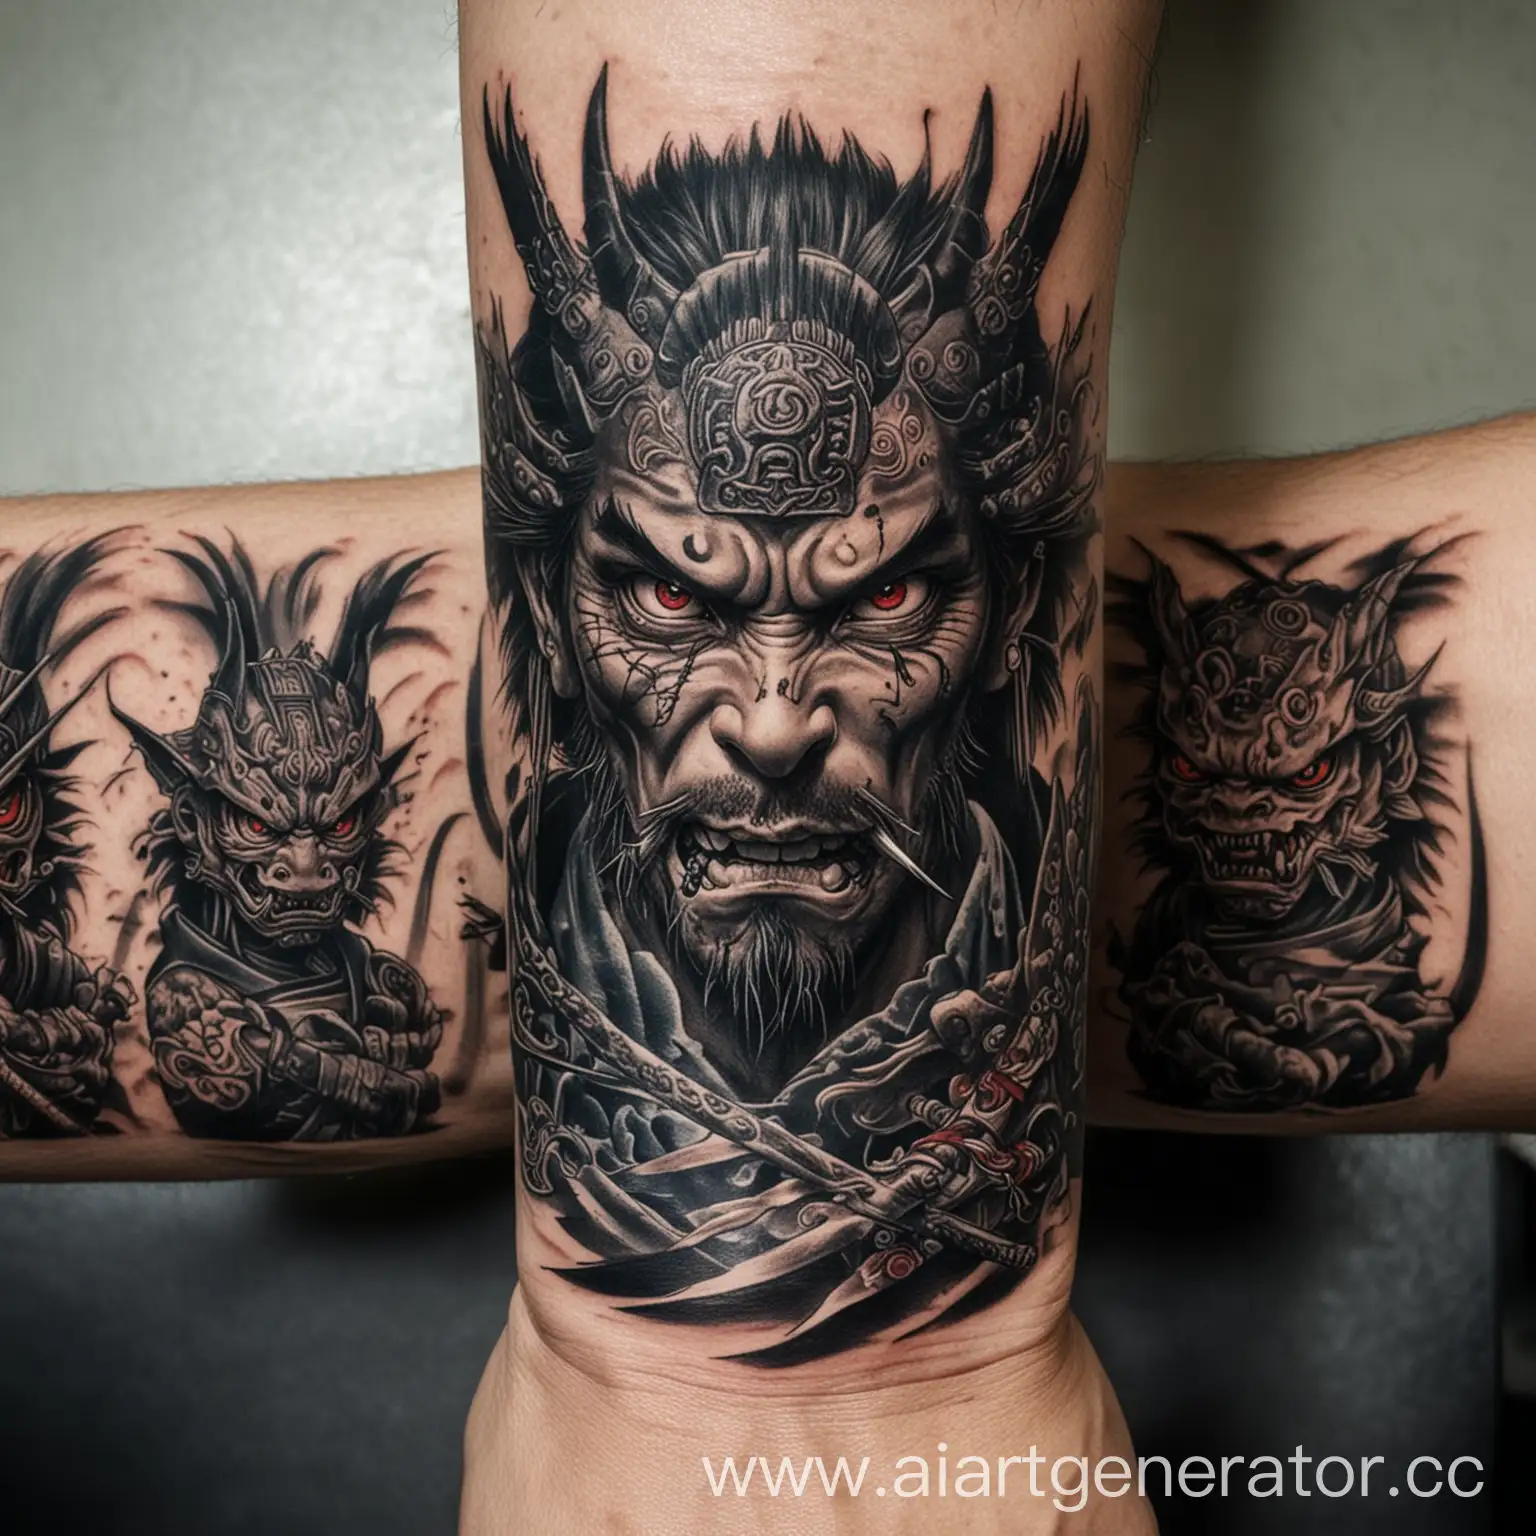 Many eyes, samurai, monster, tattoo on the wrist